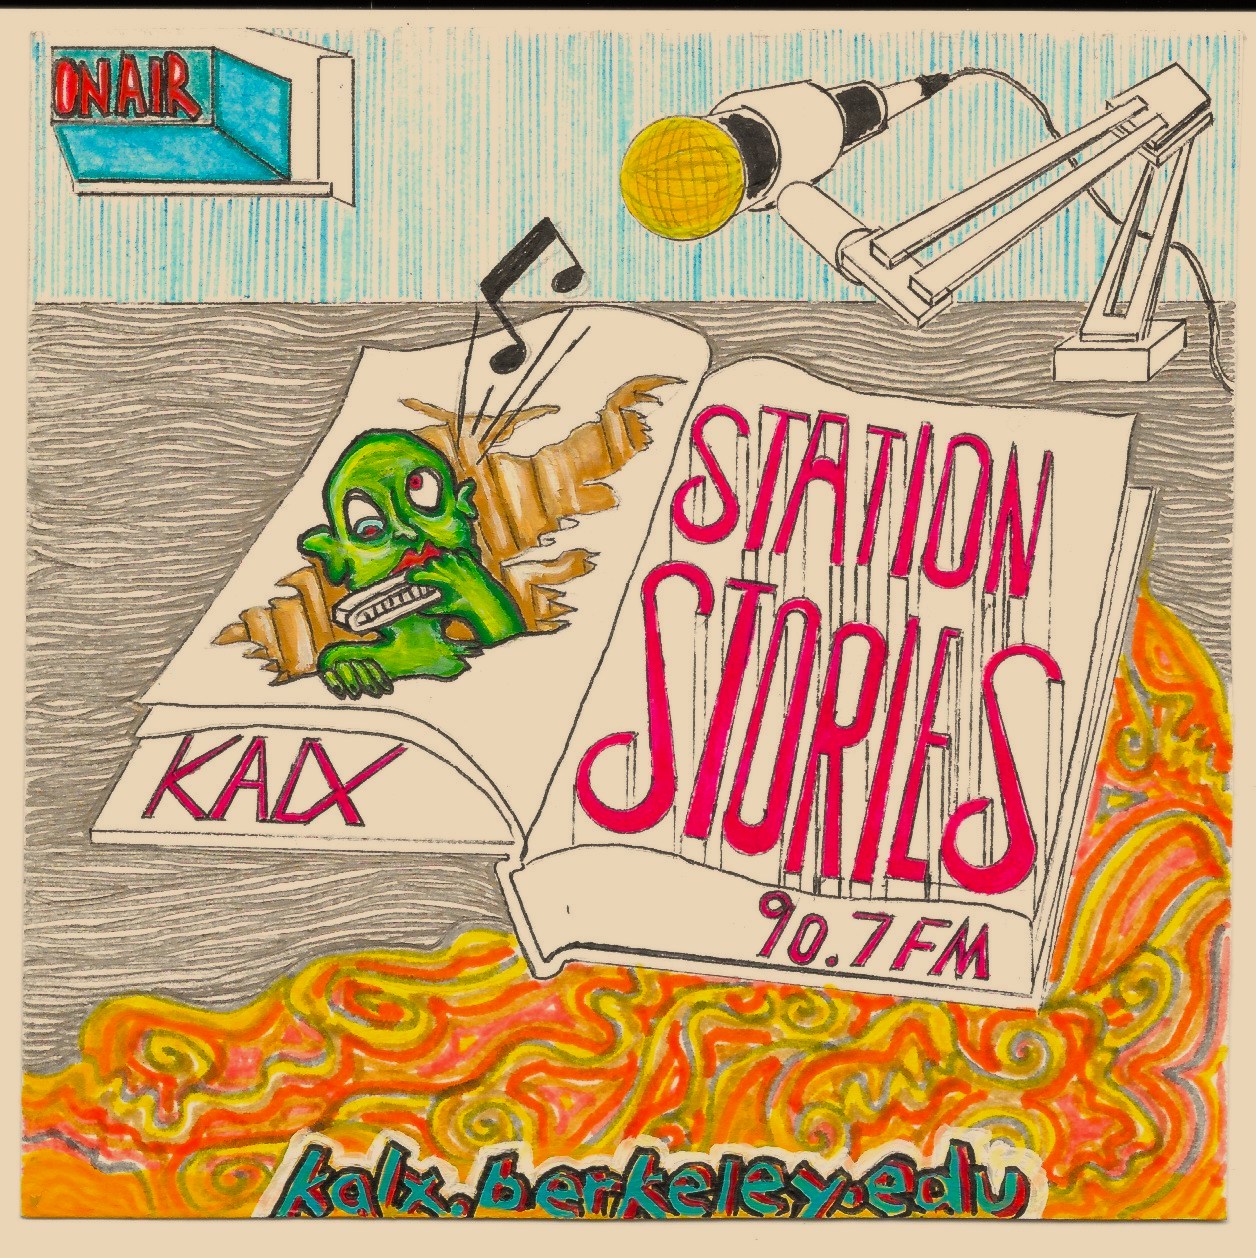 Station Stories logo